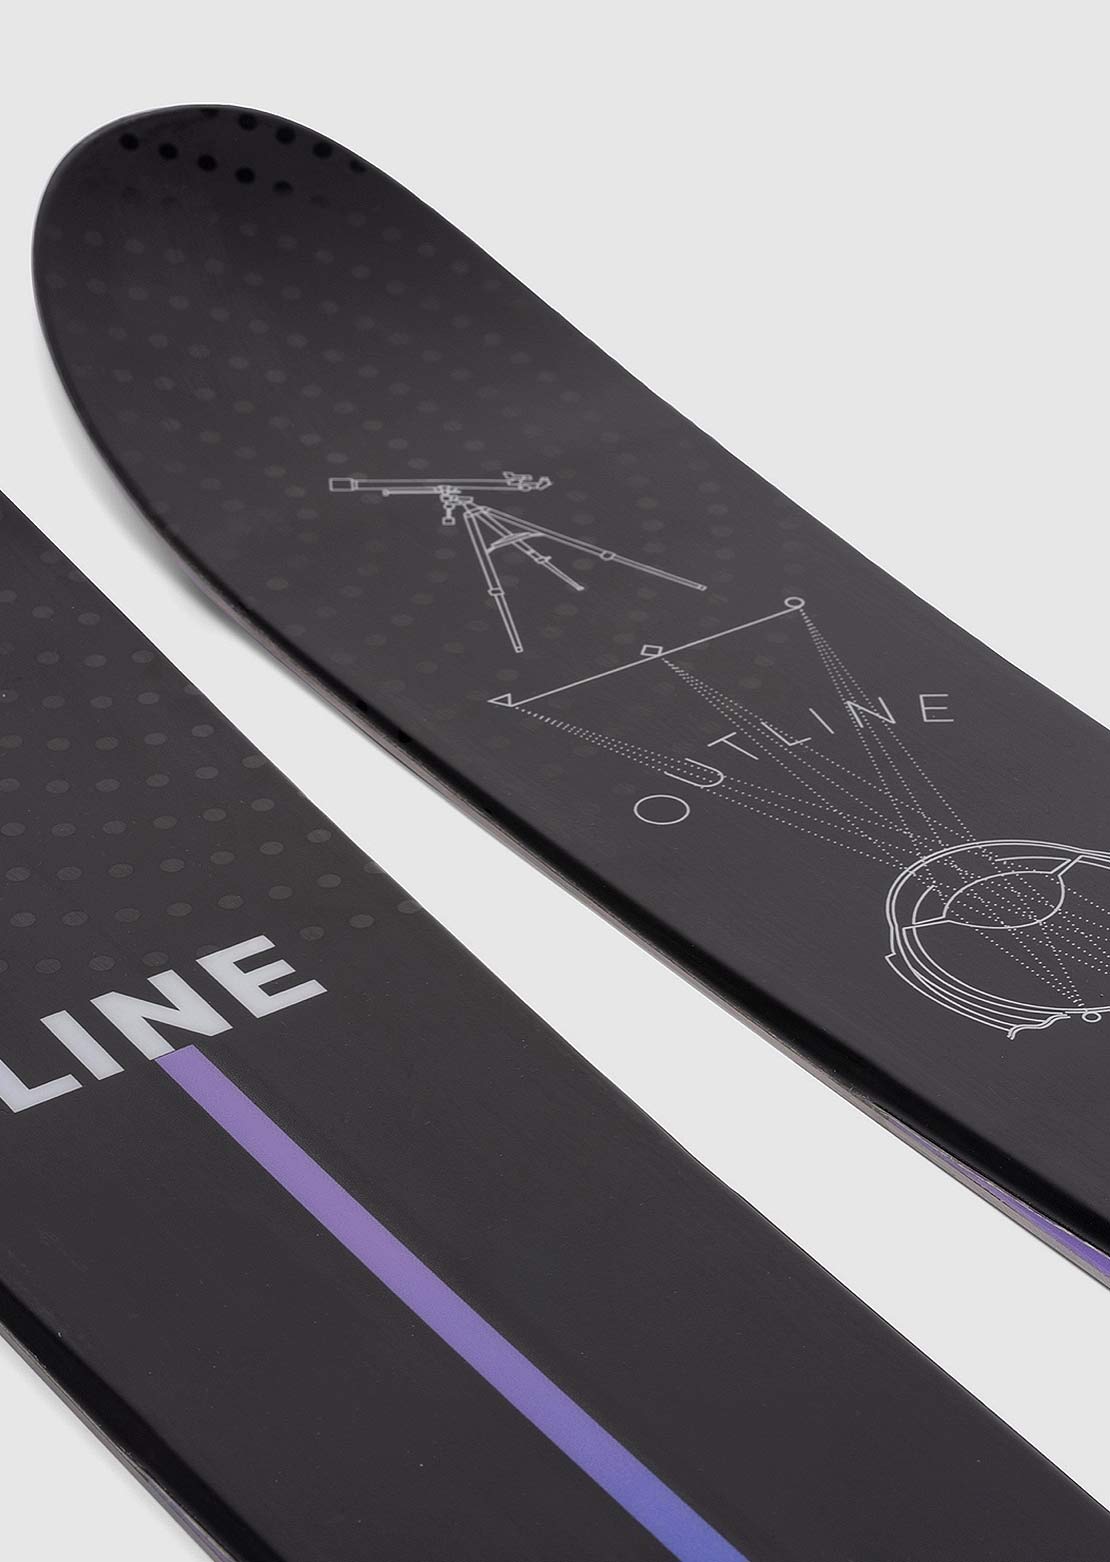 Line Men&#39;s Outline Ski